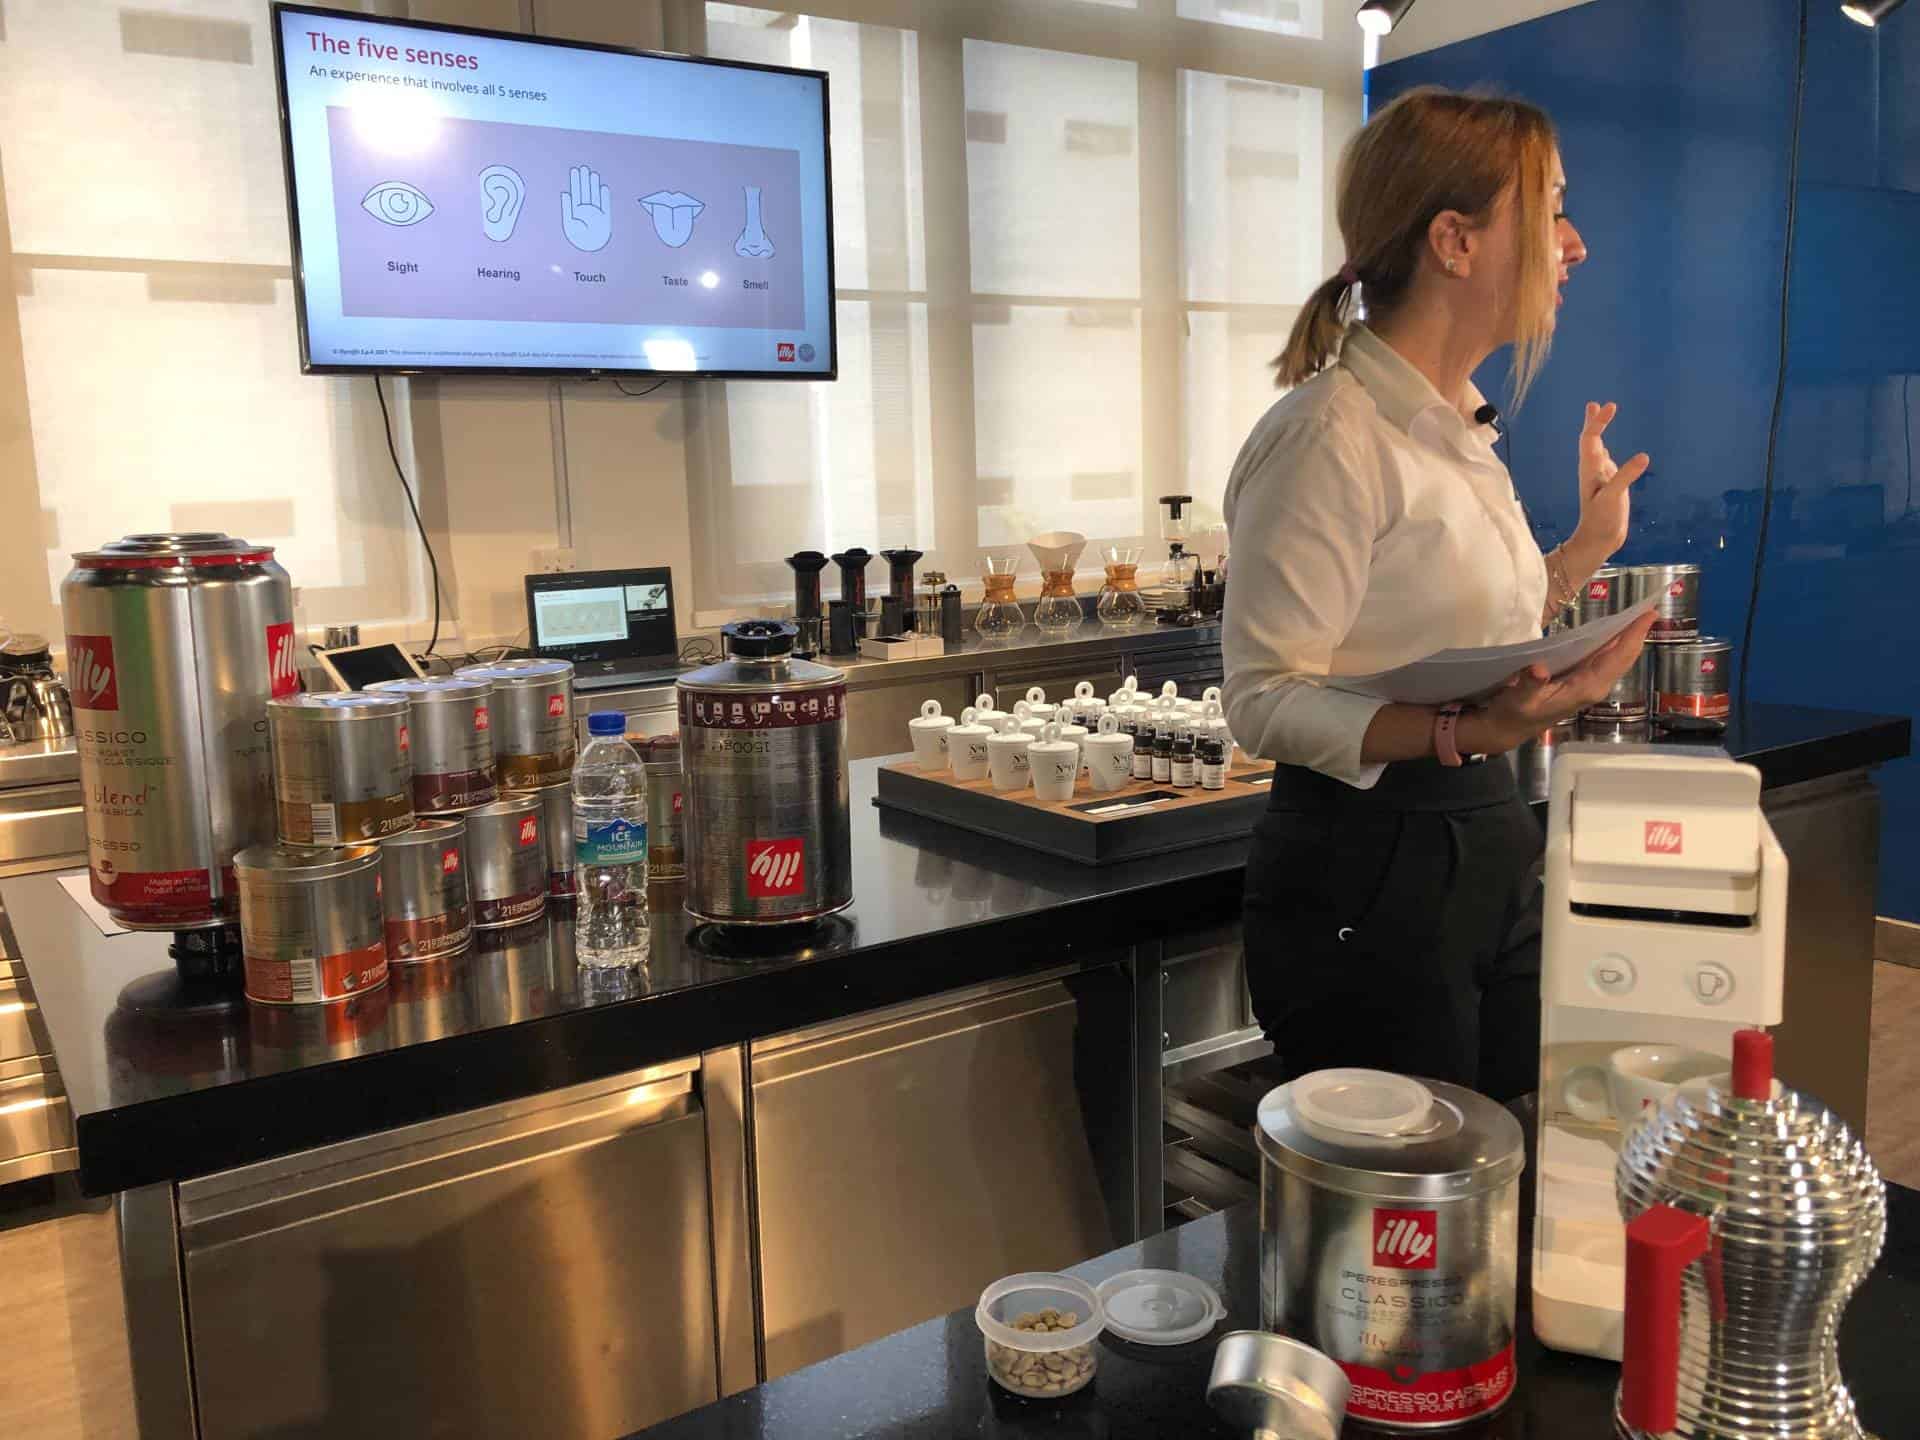 , Drink, taste, learn: Illy opens University of Coffee in Singapore